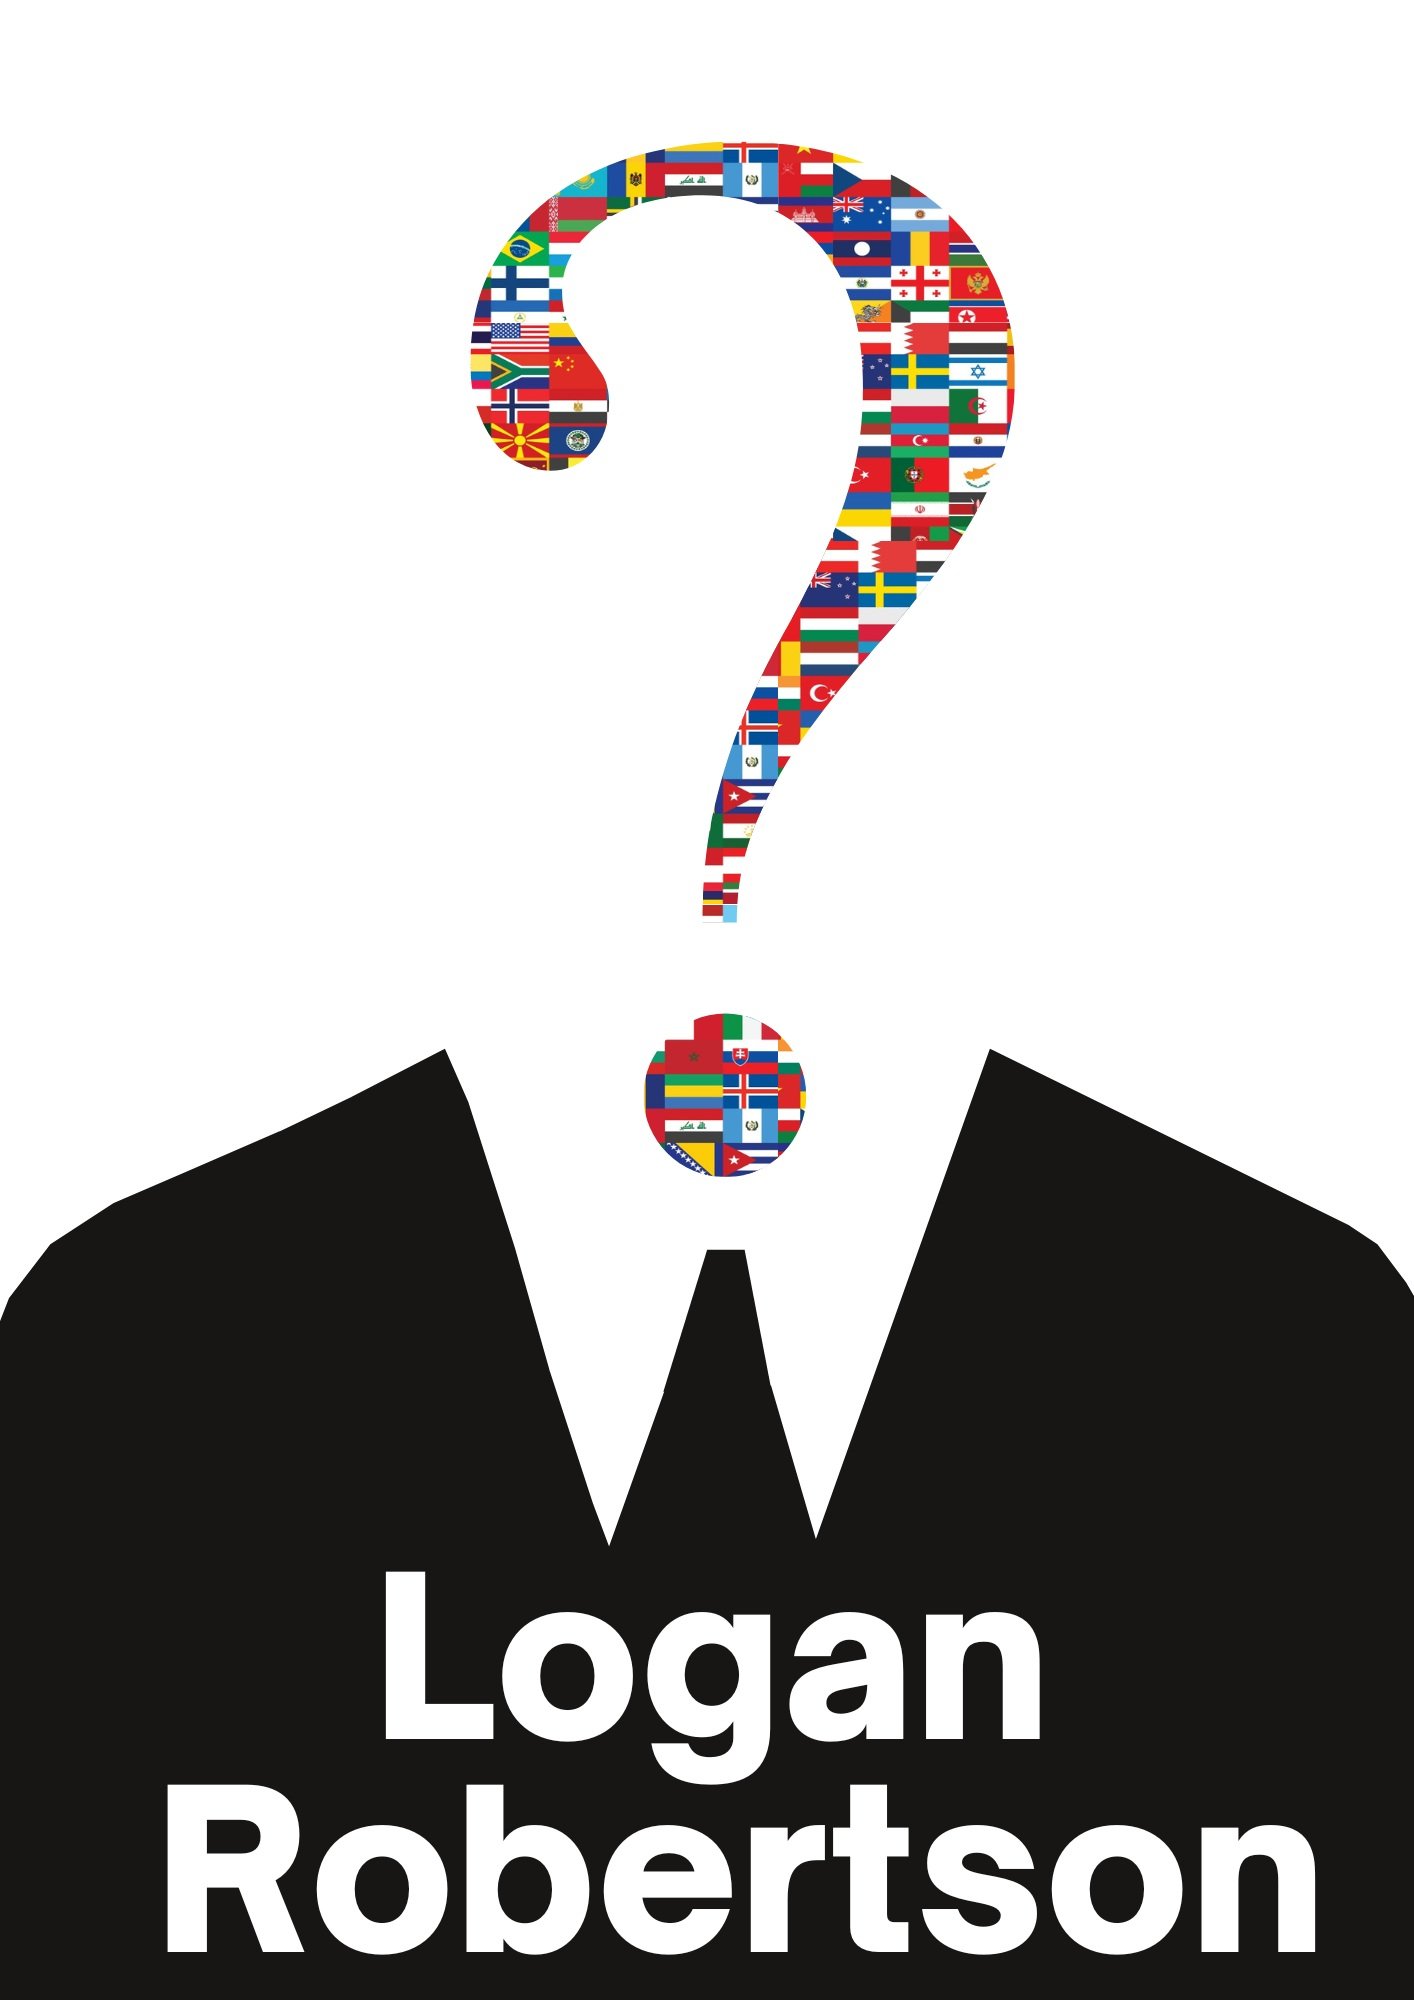 Loading Logan